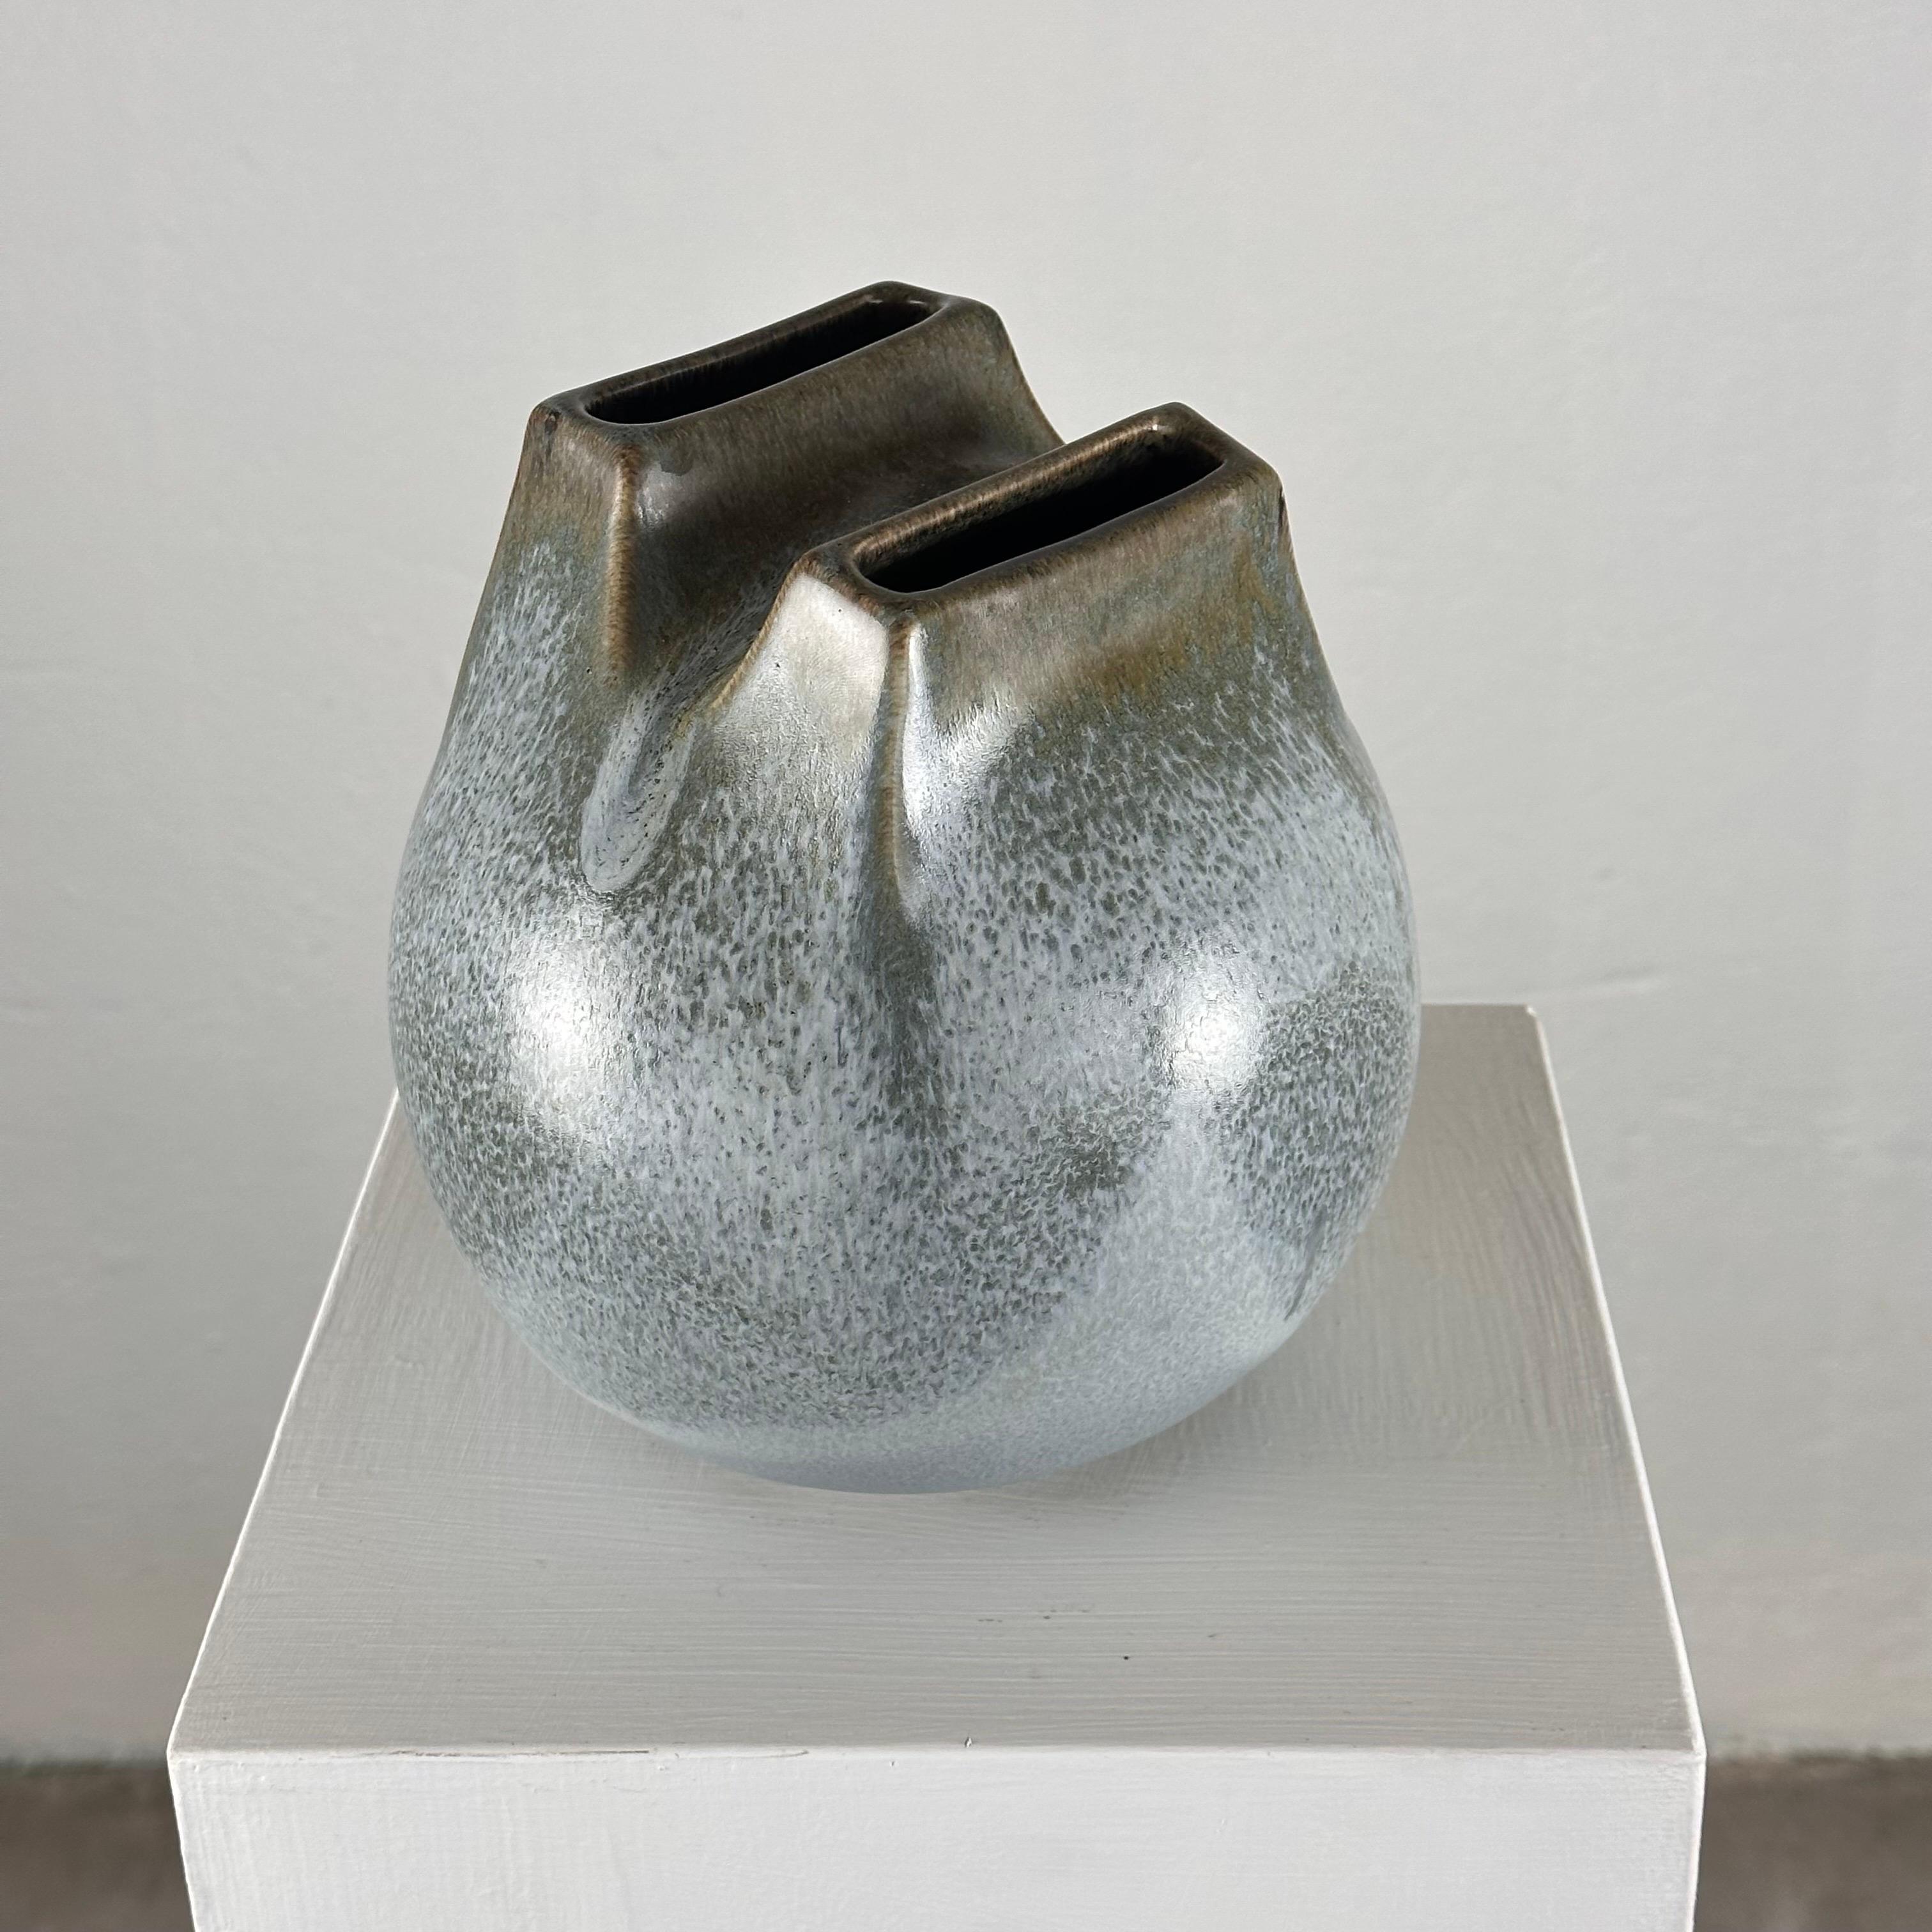 Unique 1970s Franco Bucci Ceramic Vase: 'Whistle' with Two Mouths For Sale 1